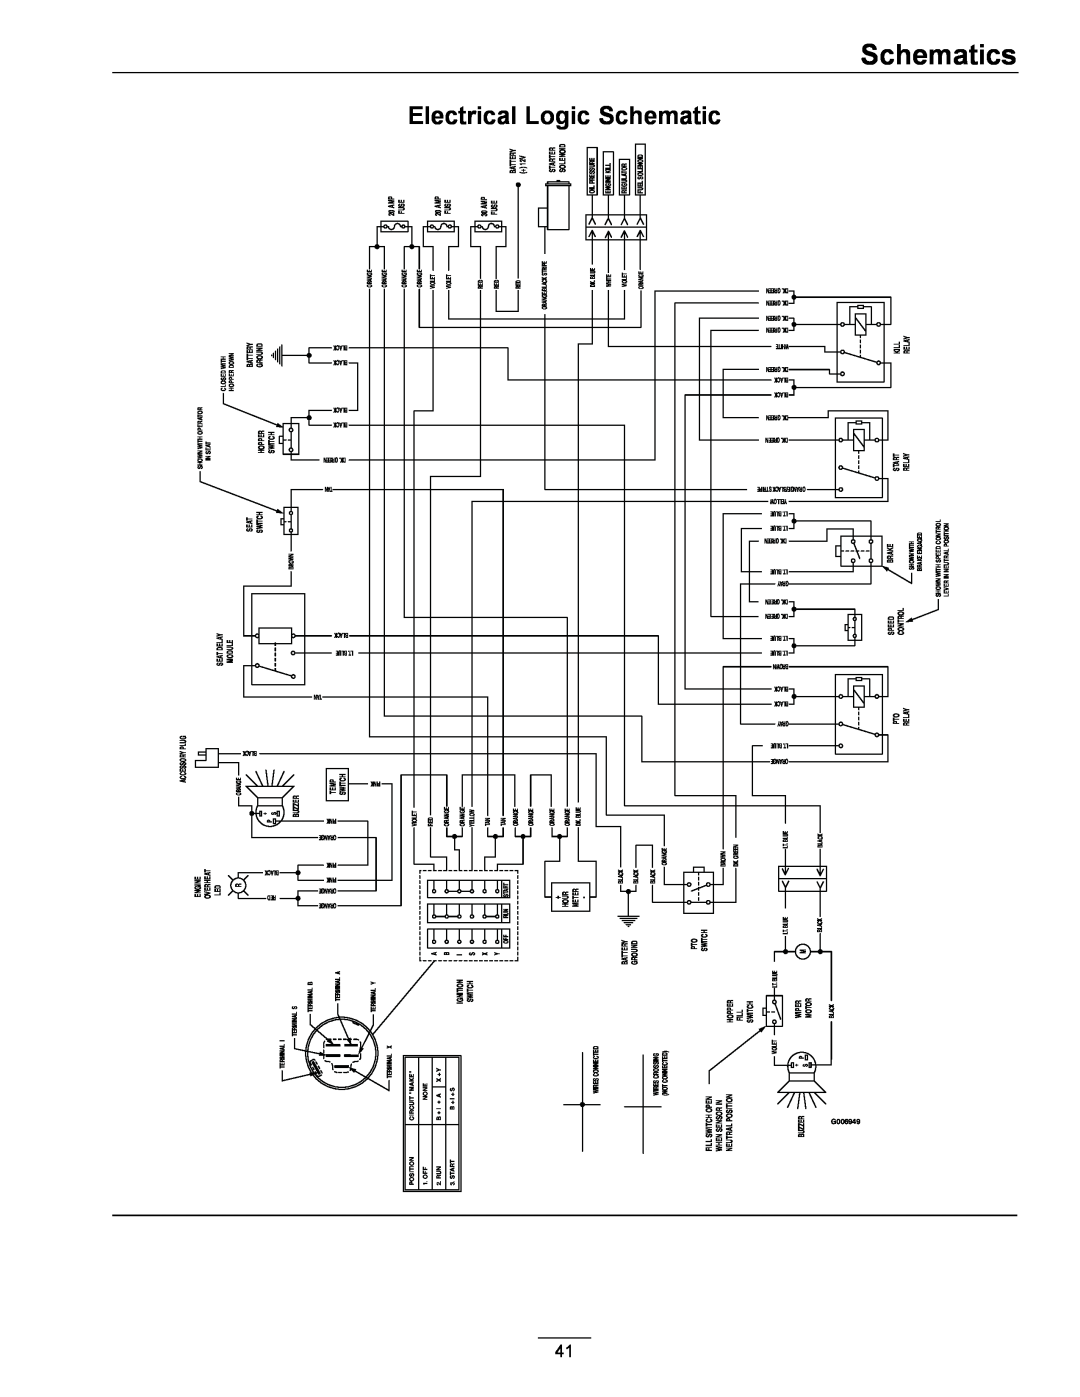 Exmark 850 manual Electrical Logic Schematic, Schematics 